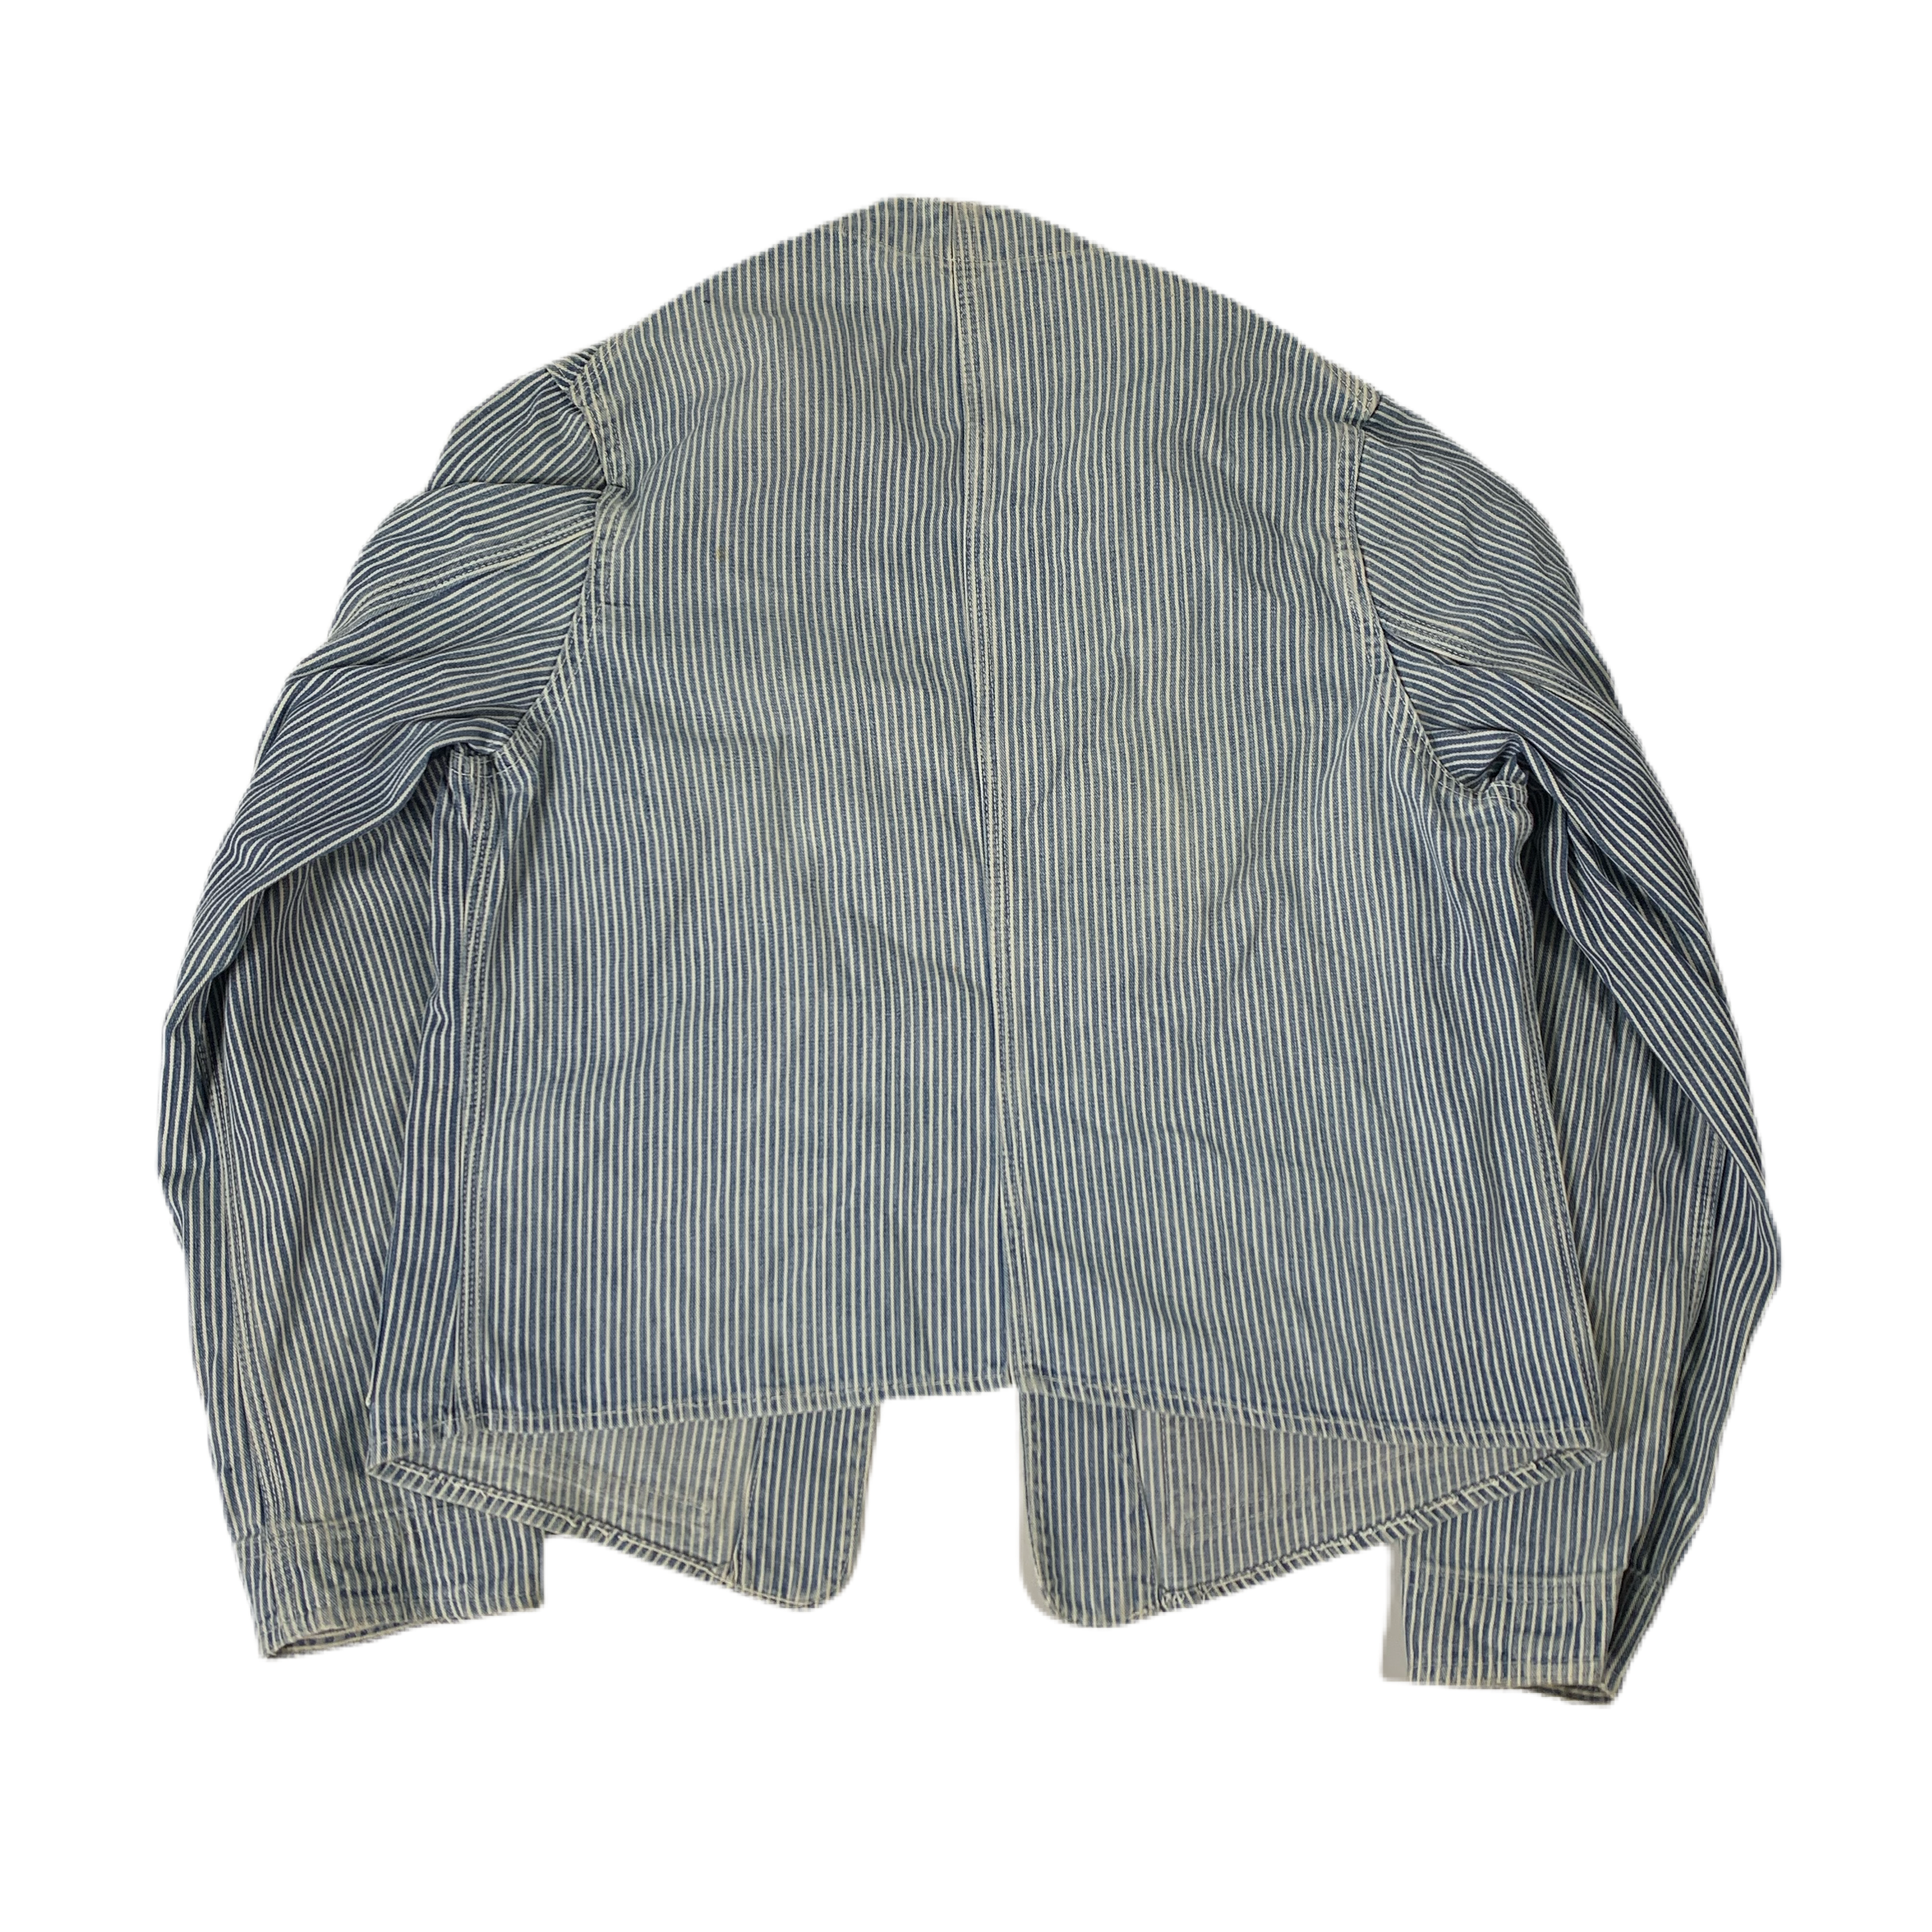 Hickory Stripe Chore Coat  Chore coat, American workwear, American denim